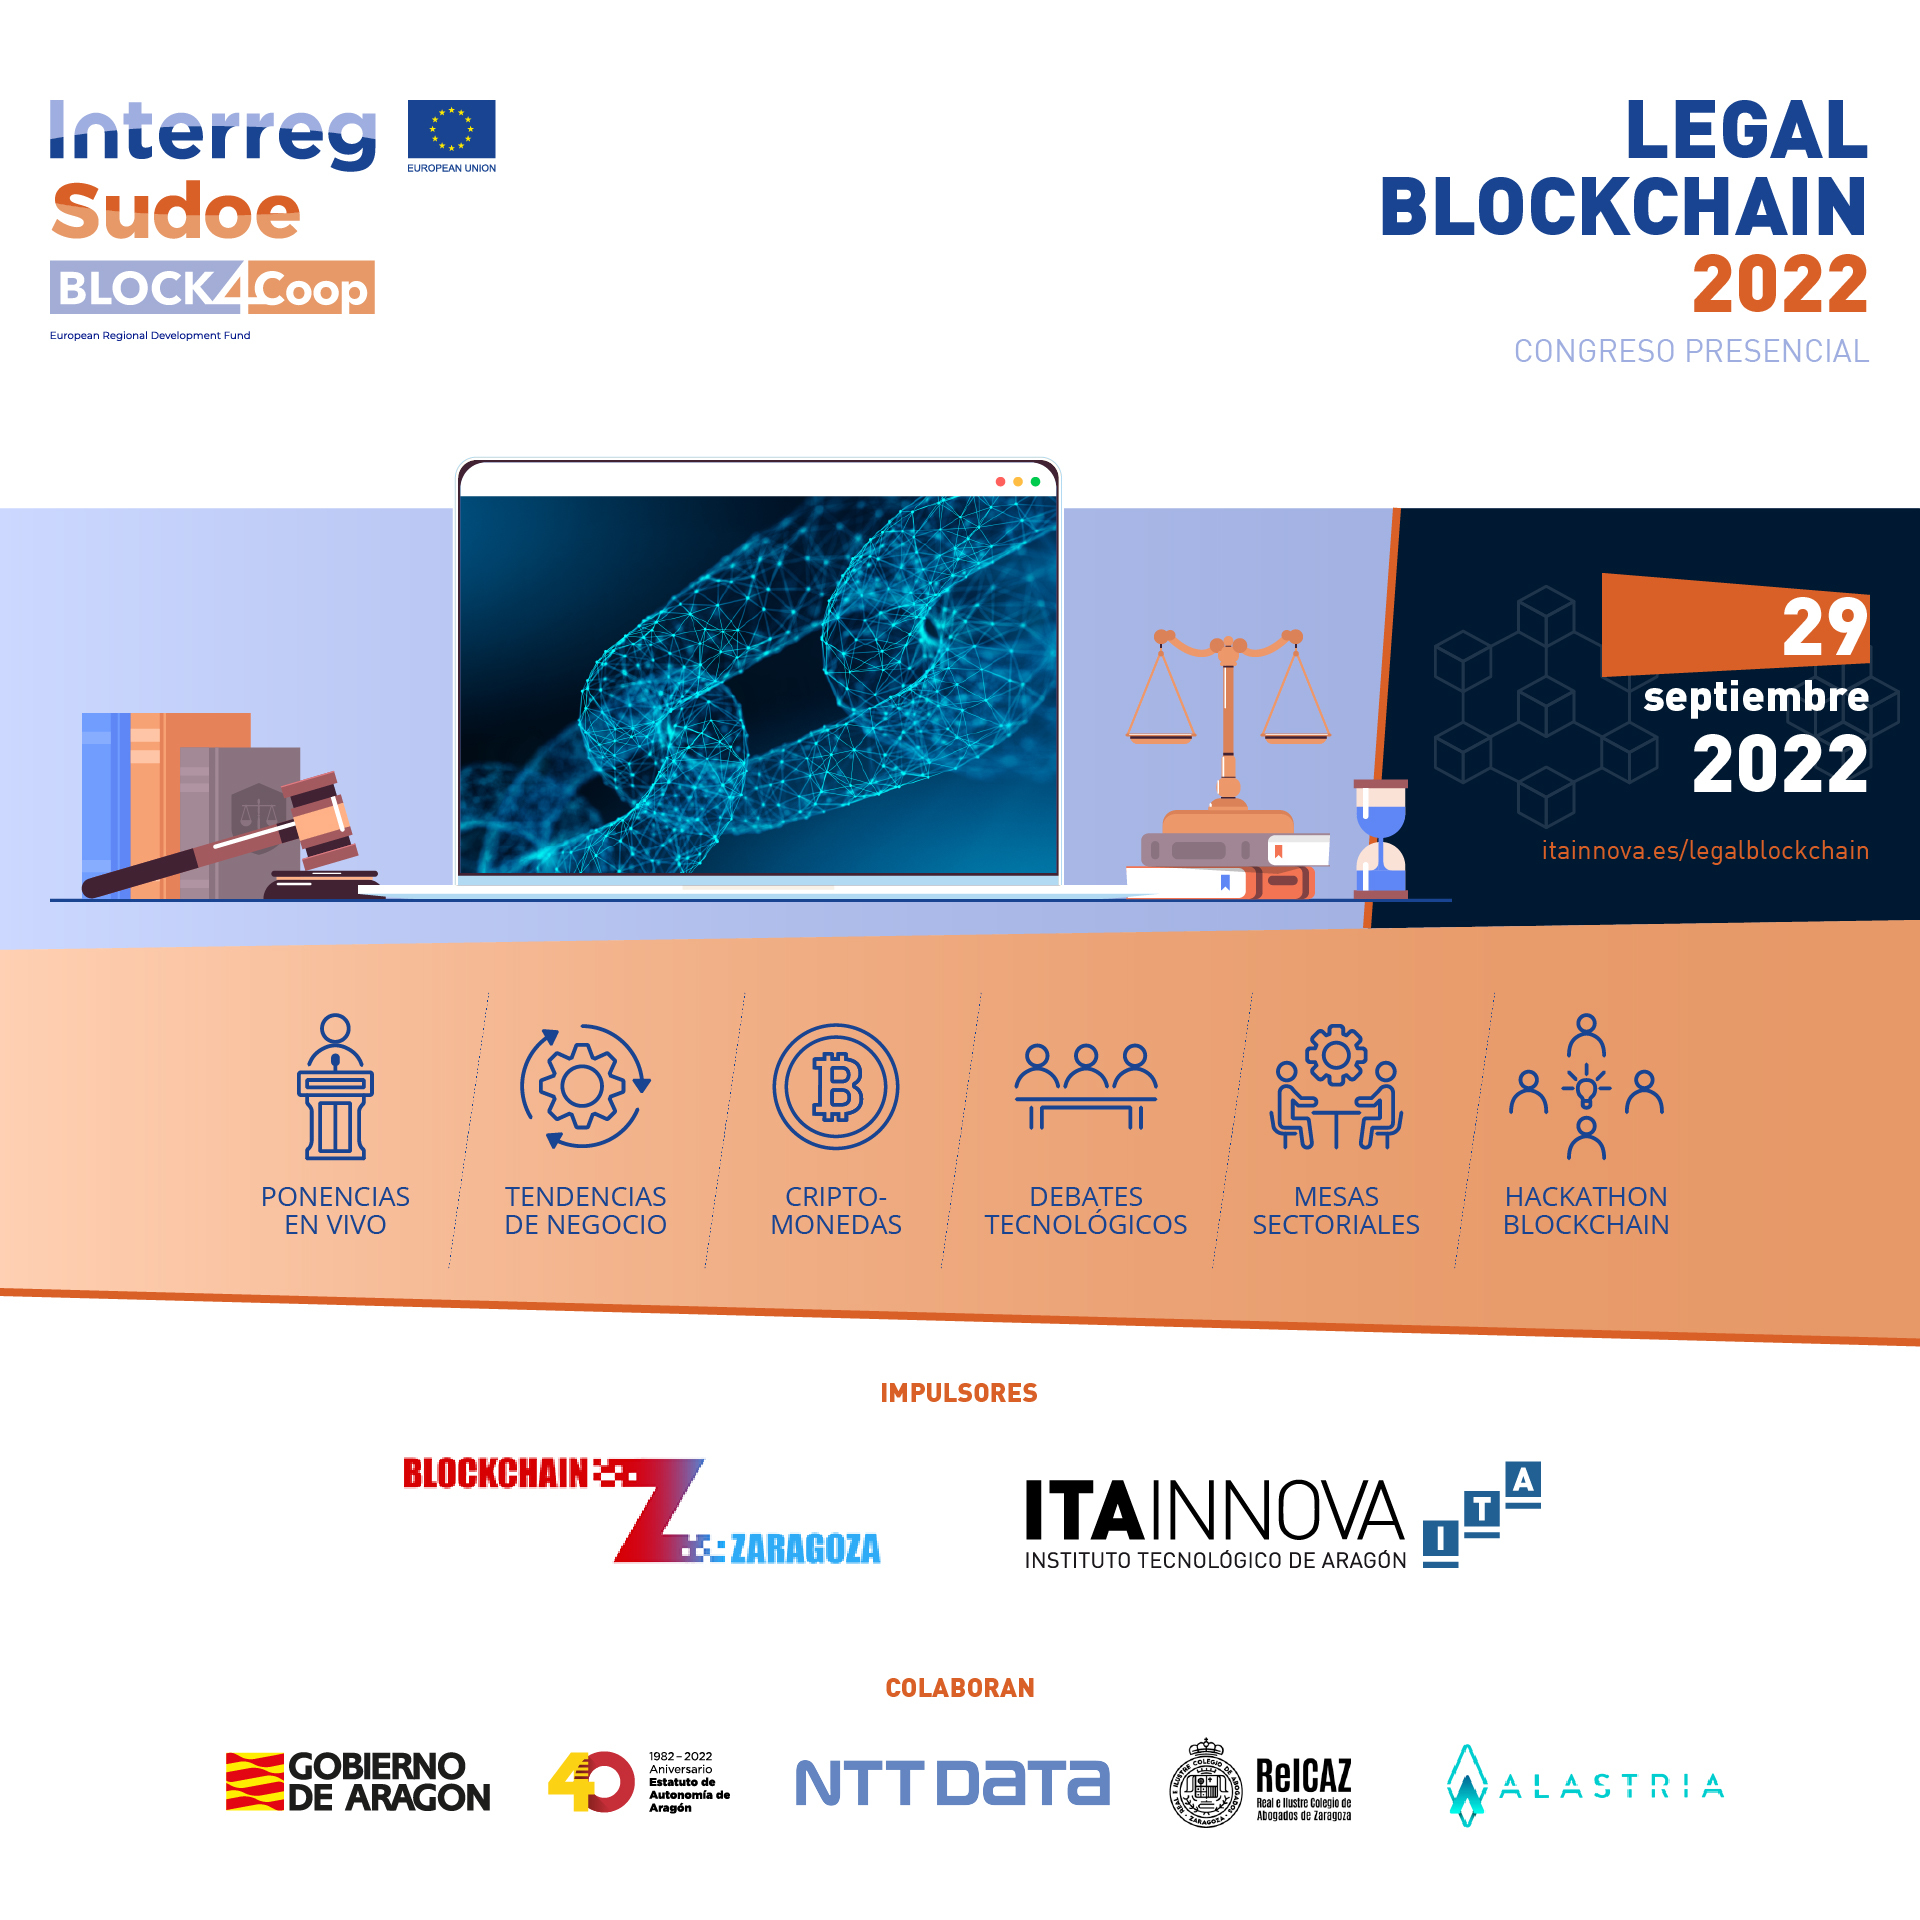 Legal Blockchain 2022